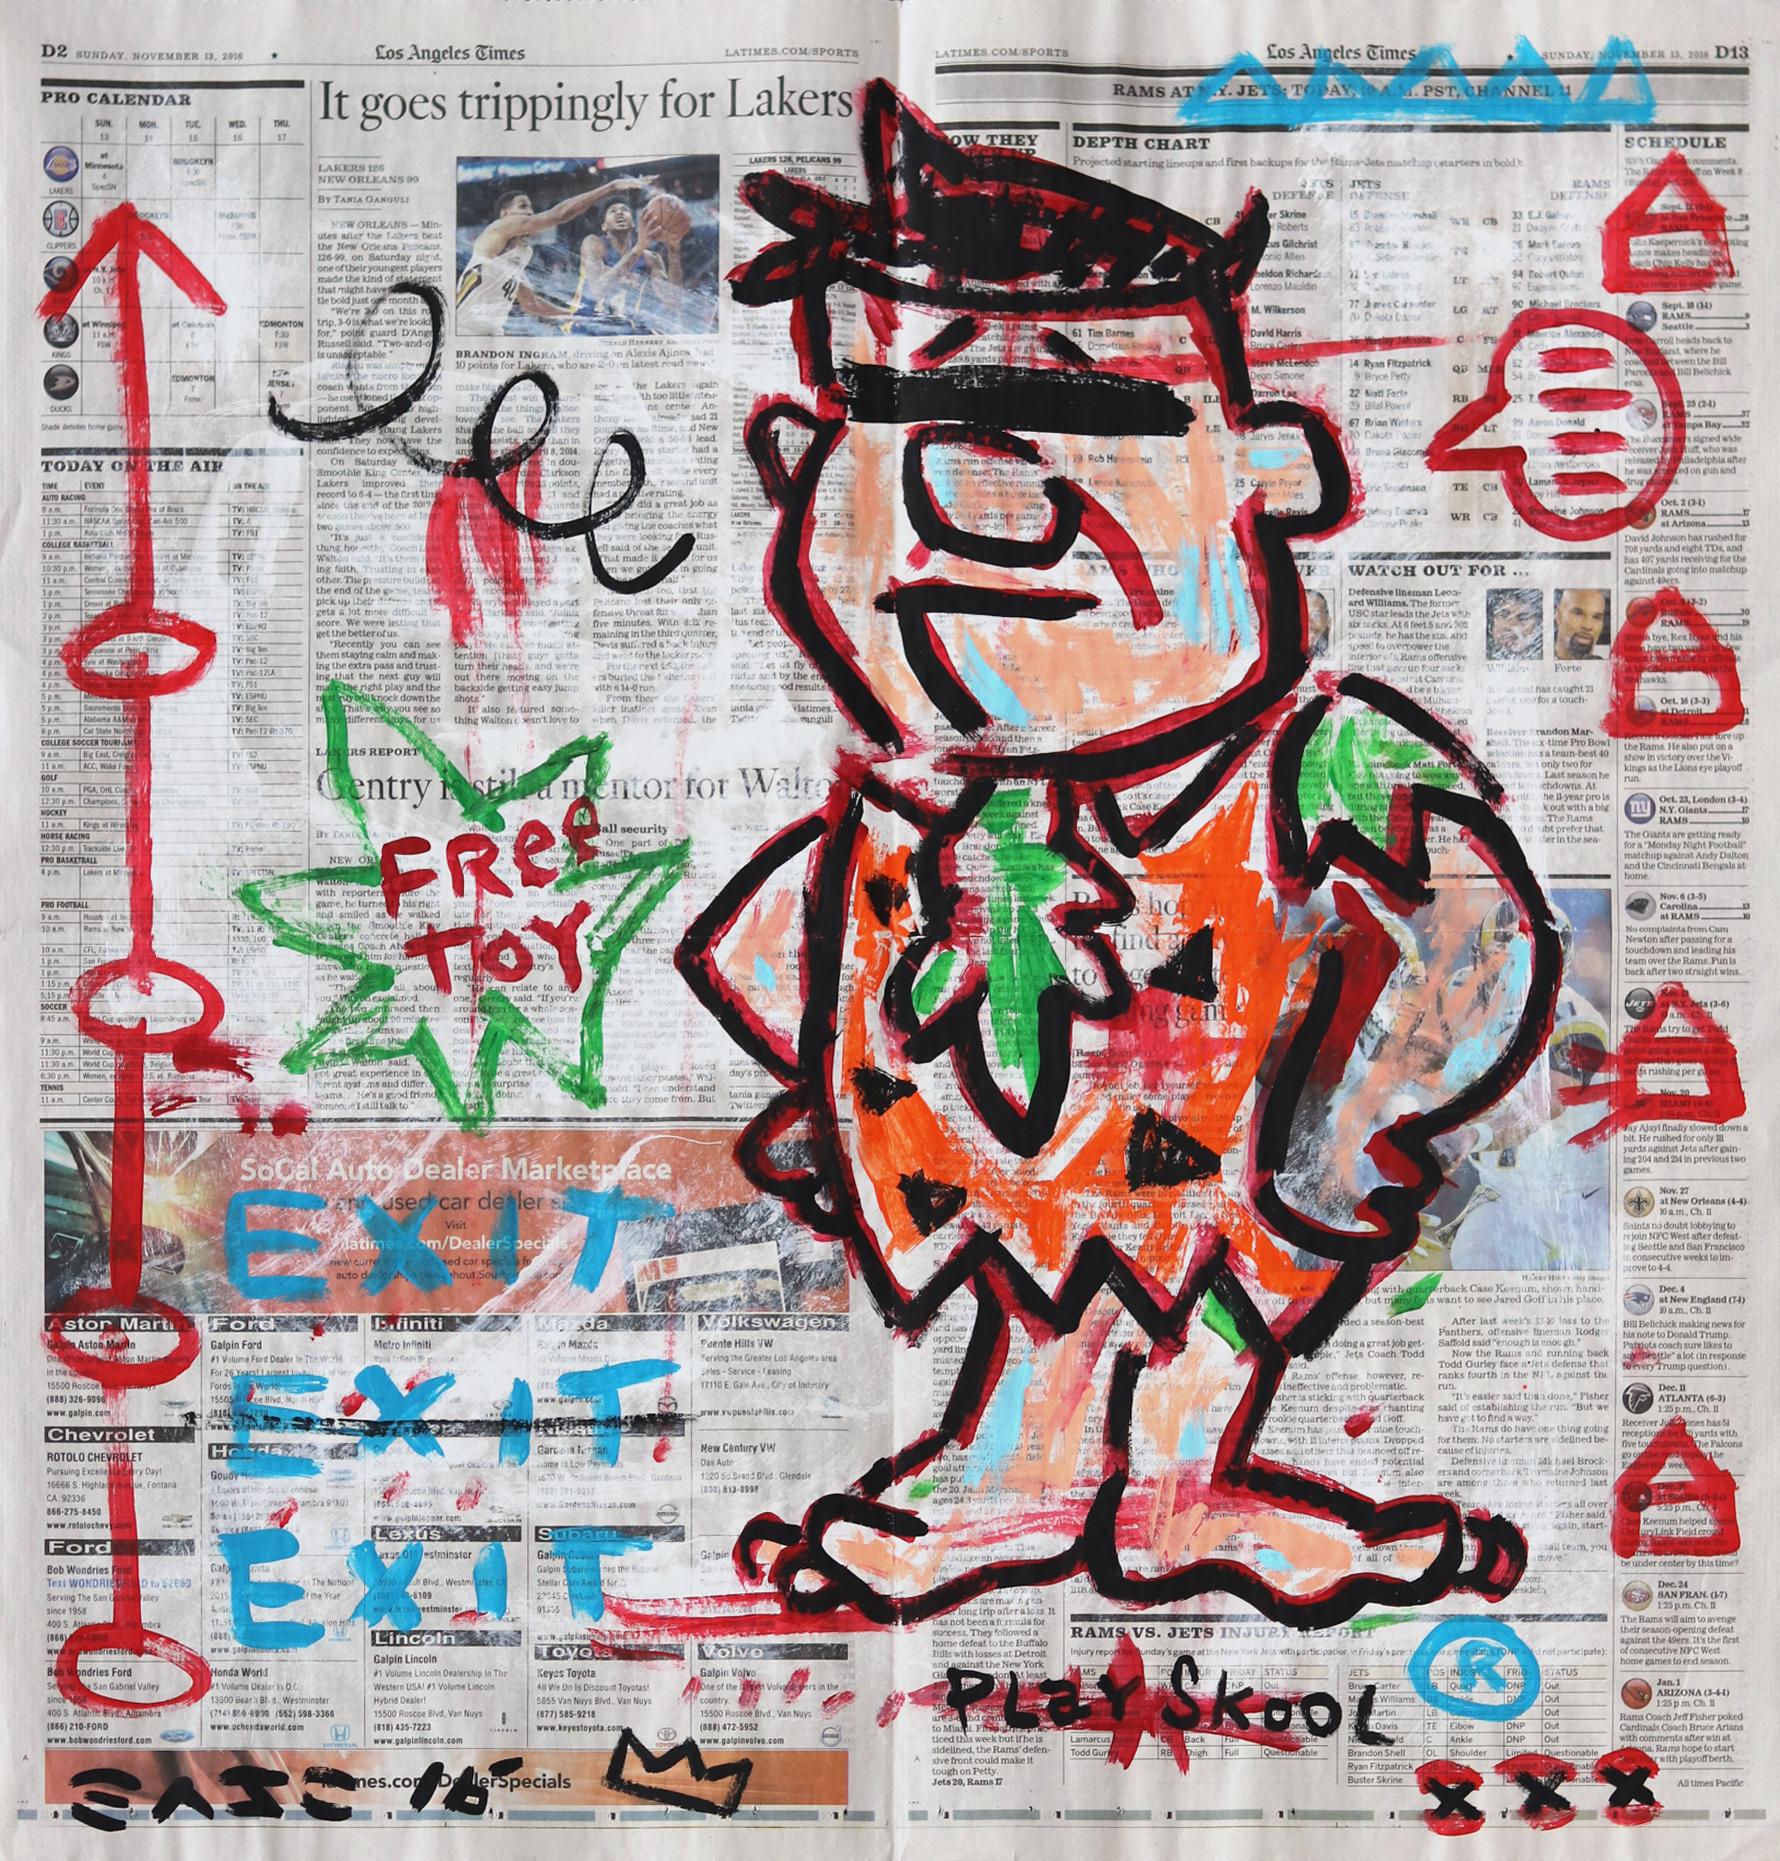 "Free Flintstone Toy" Contemporary Pop Art Original by Gary John